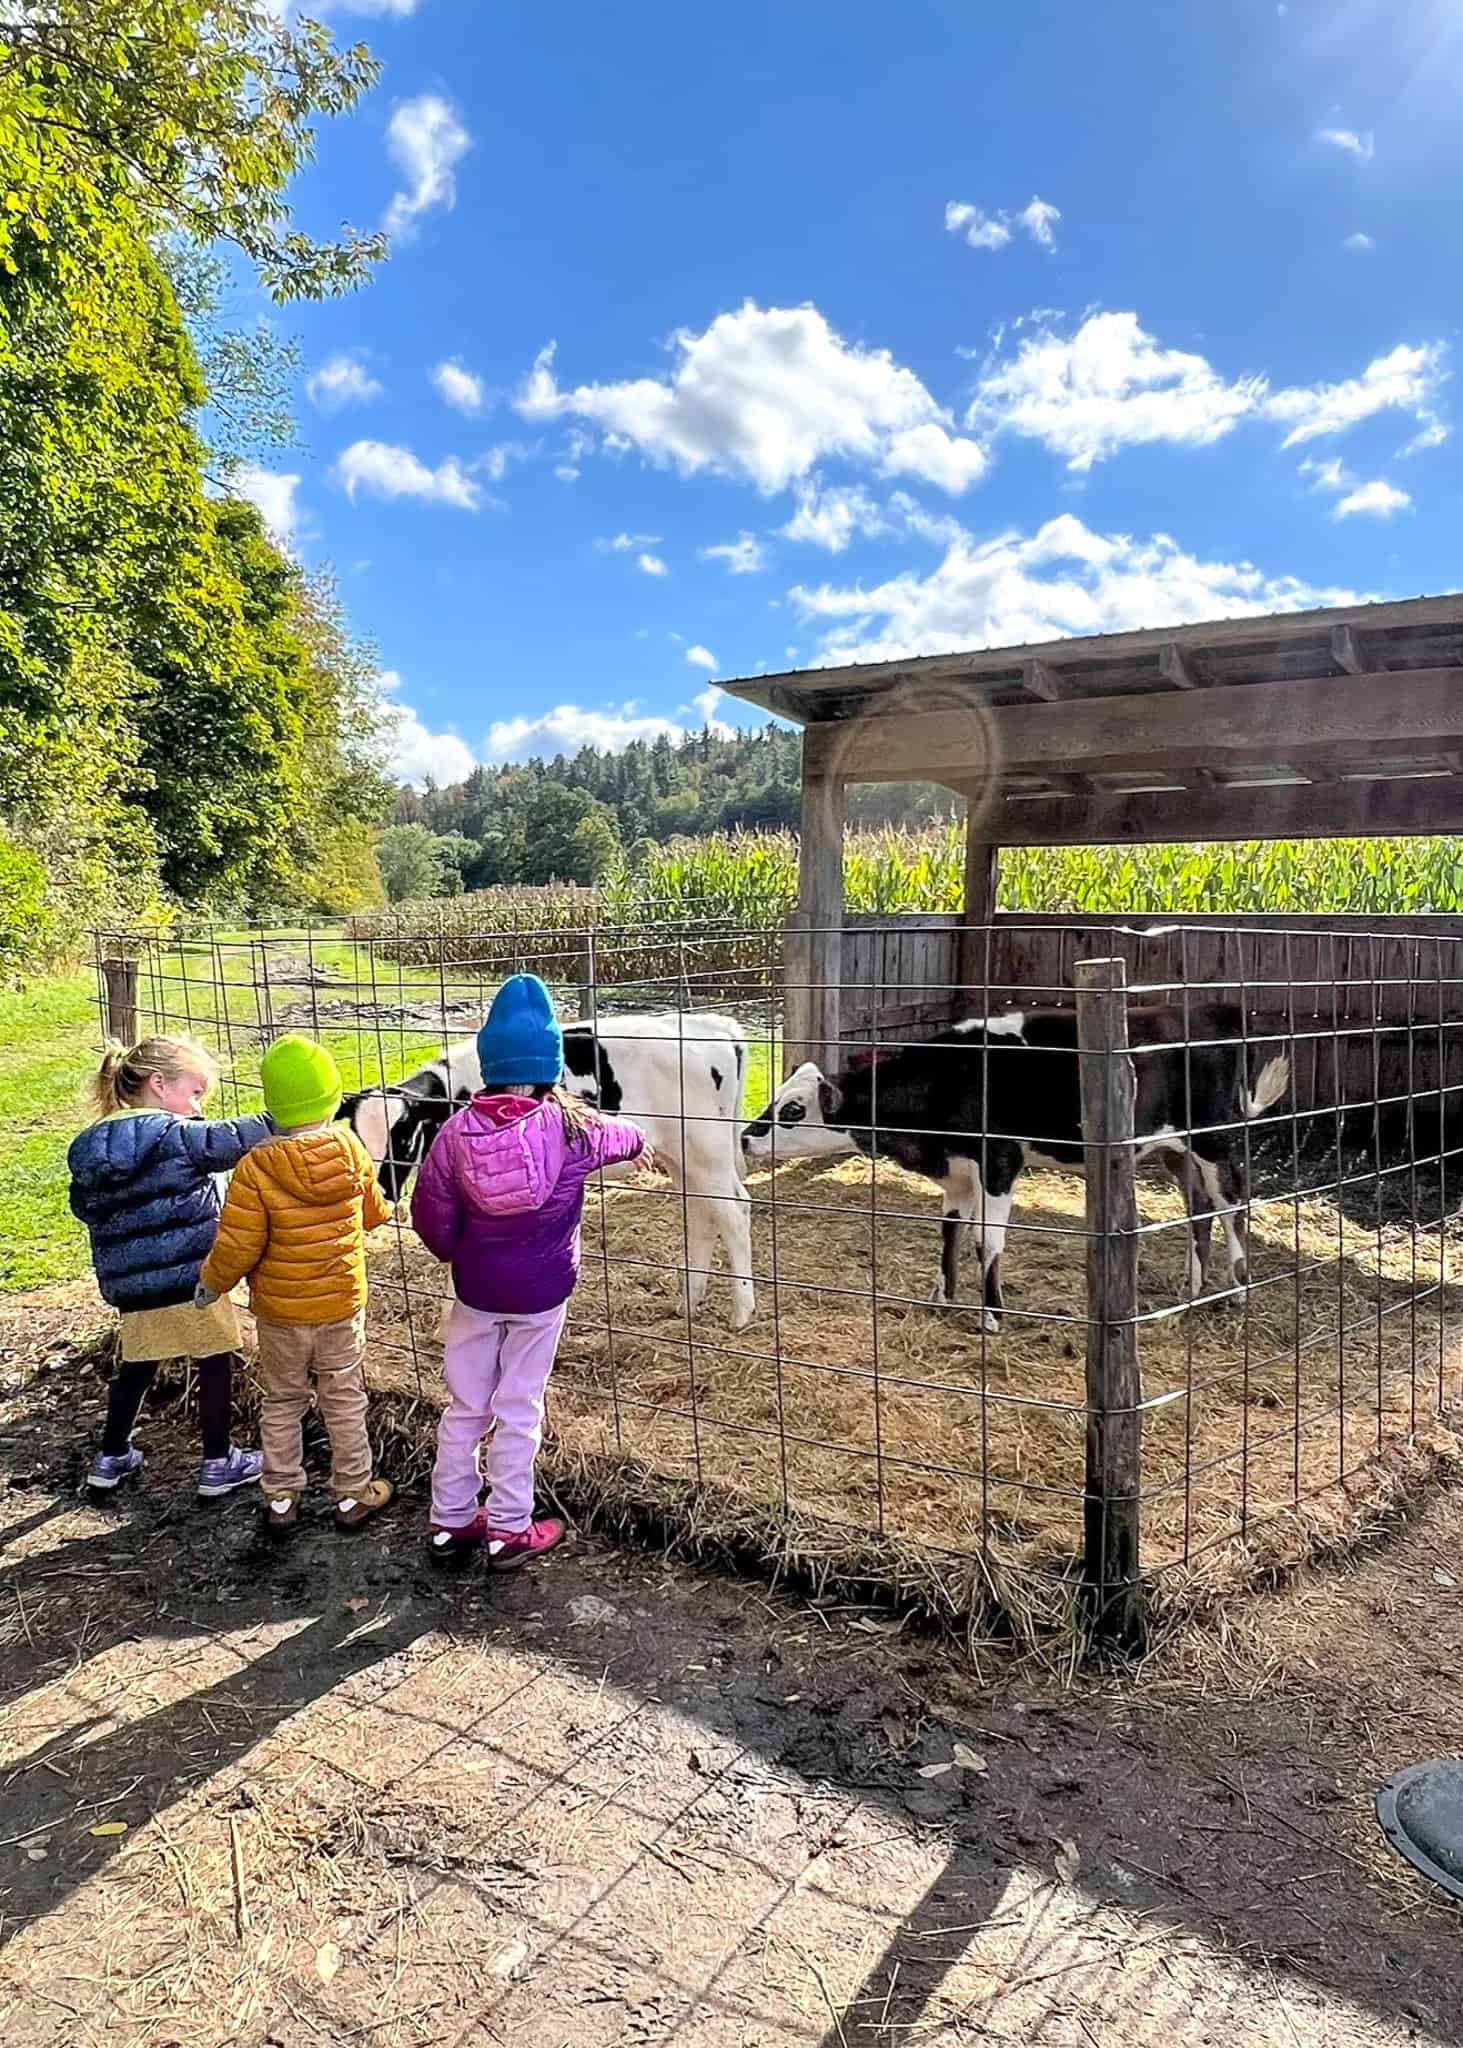 kids feeding farm animals - Stowe vt